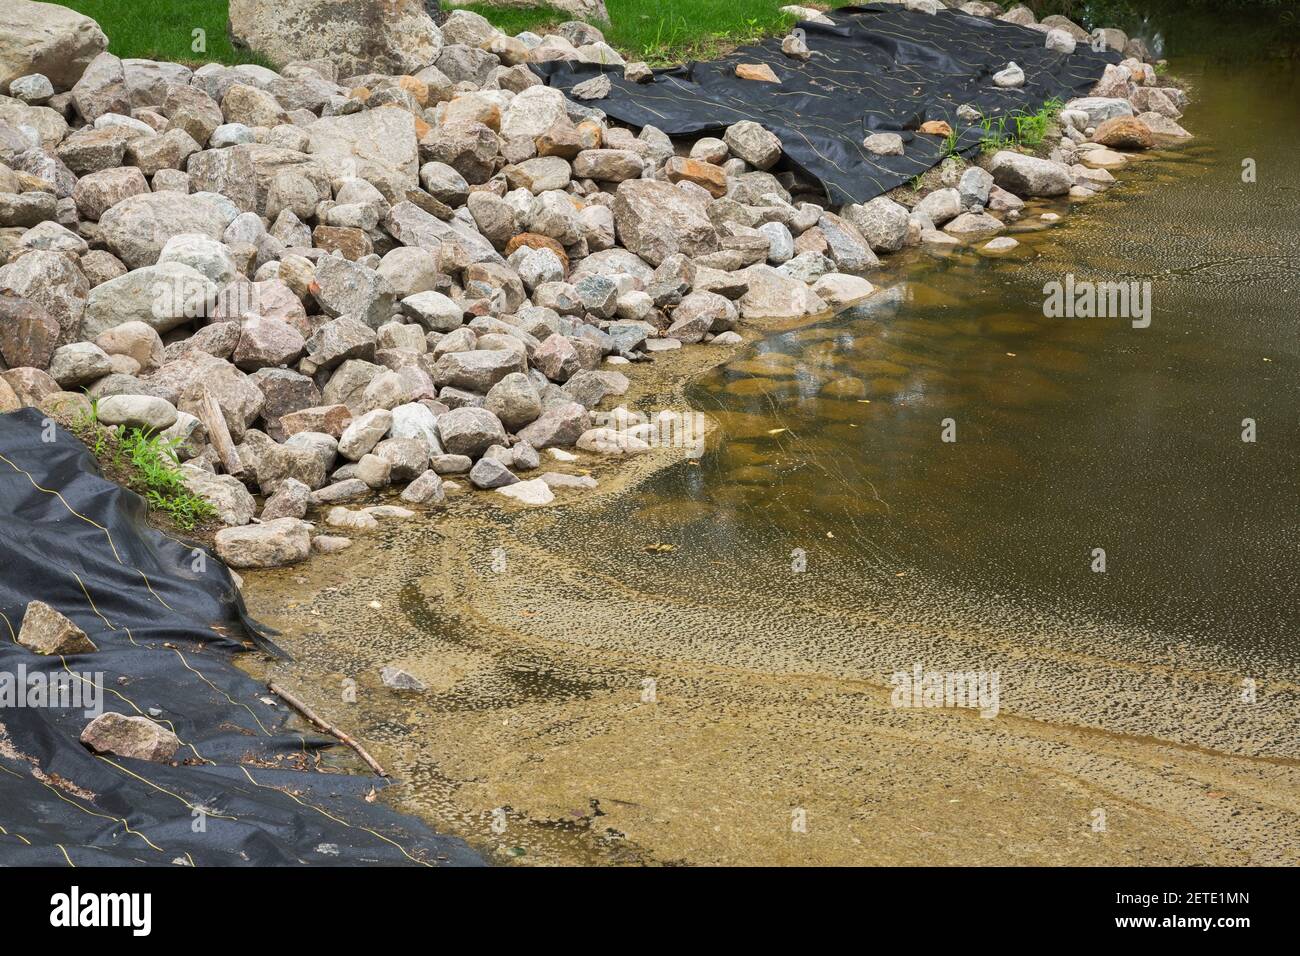 Black polypropylene liner and decorative rocks at edge of large ornamental pond under construction Stock Photo